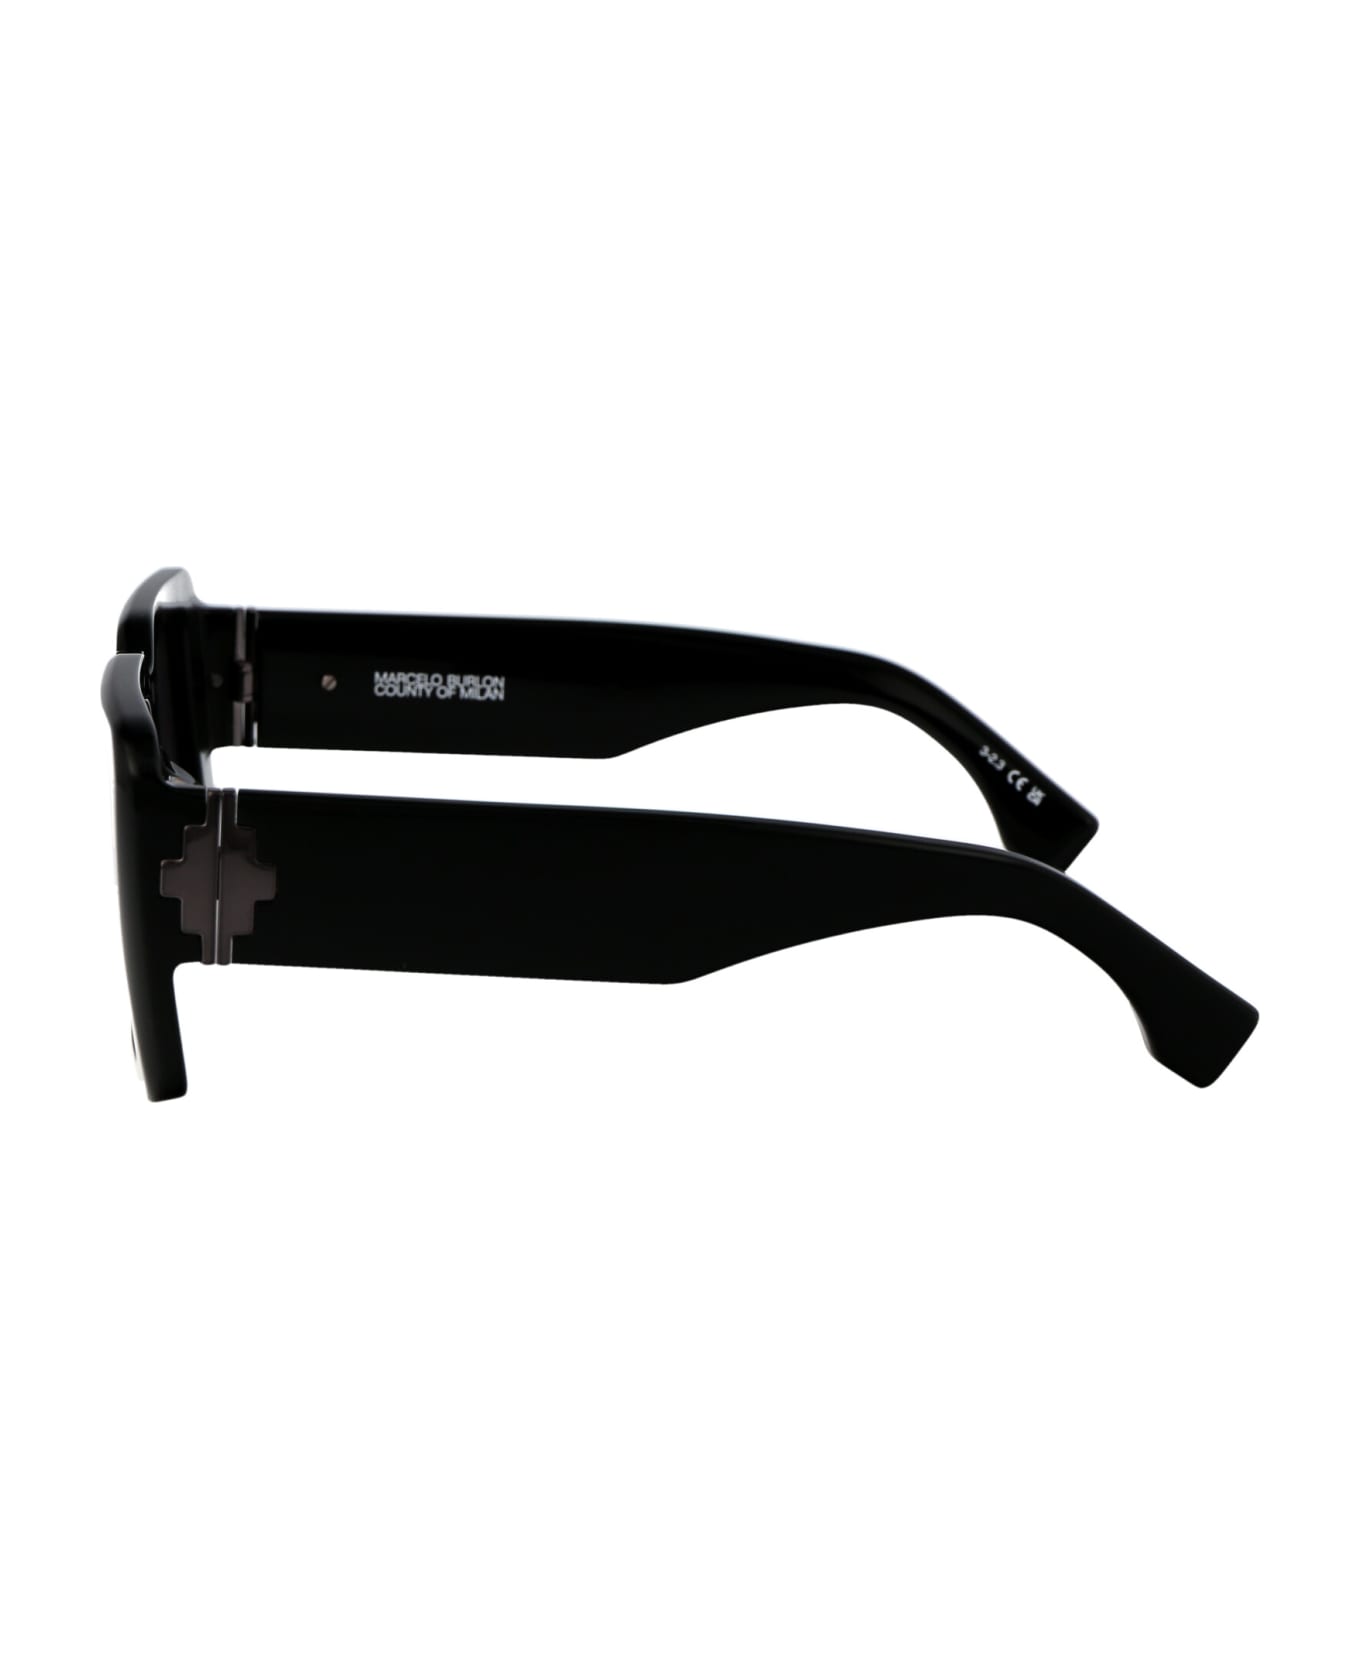 Marcelo Burlon Sicomoro Sunglasses - 1007 BLACK サングラス